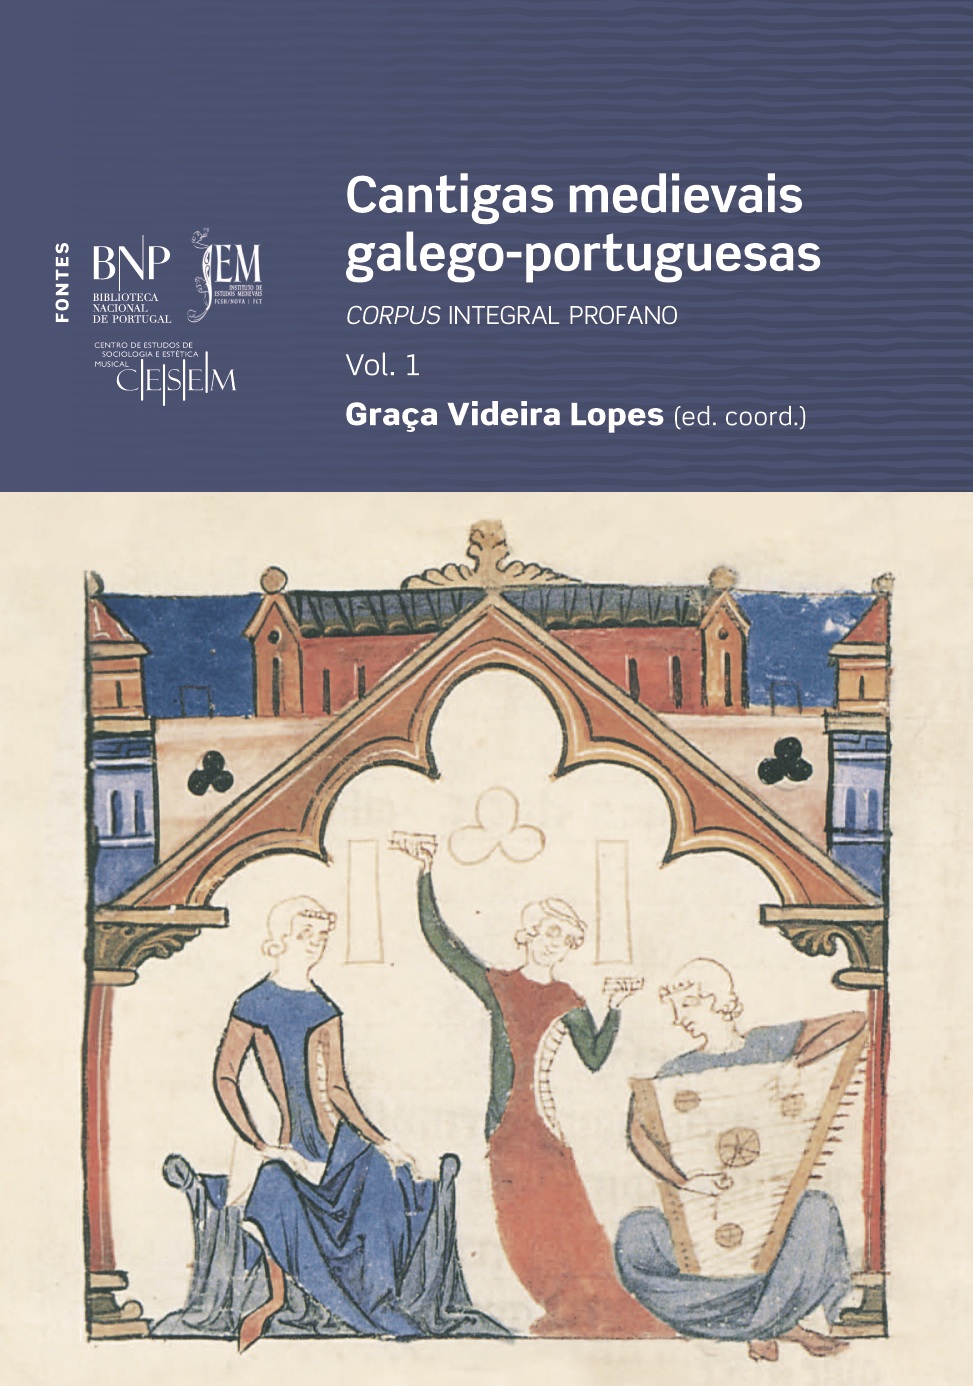 Cantigas Medievais Galego-Portuguesas: corpus integral profano [2 volumes]